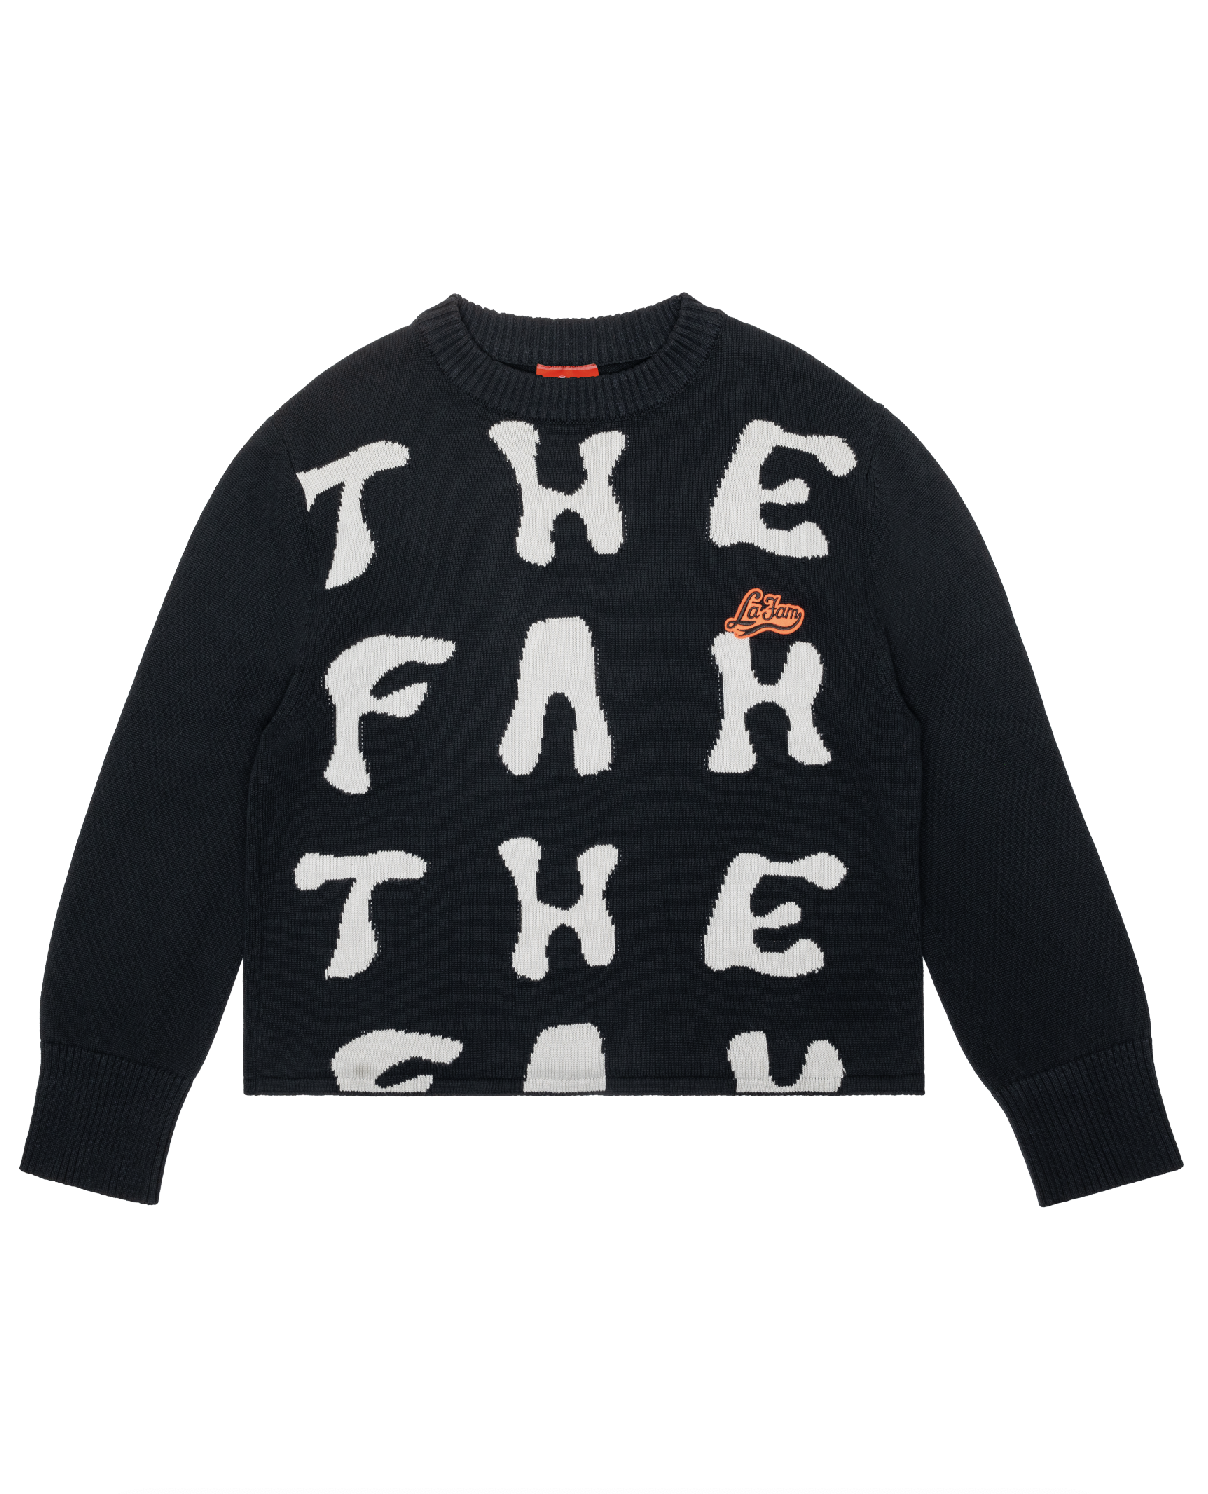 THE FAM knit black